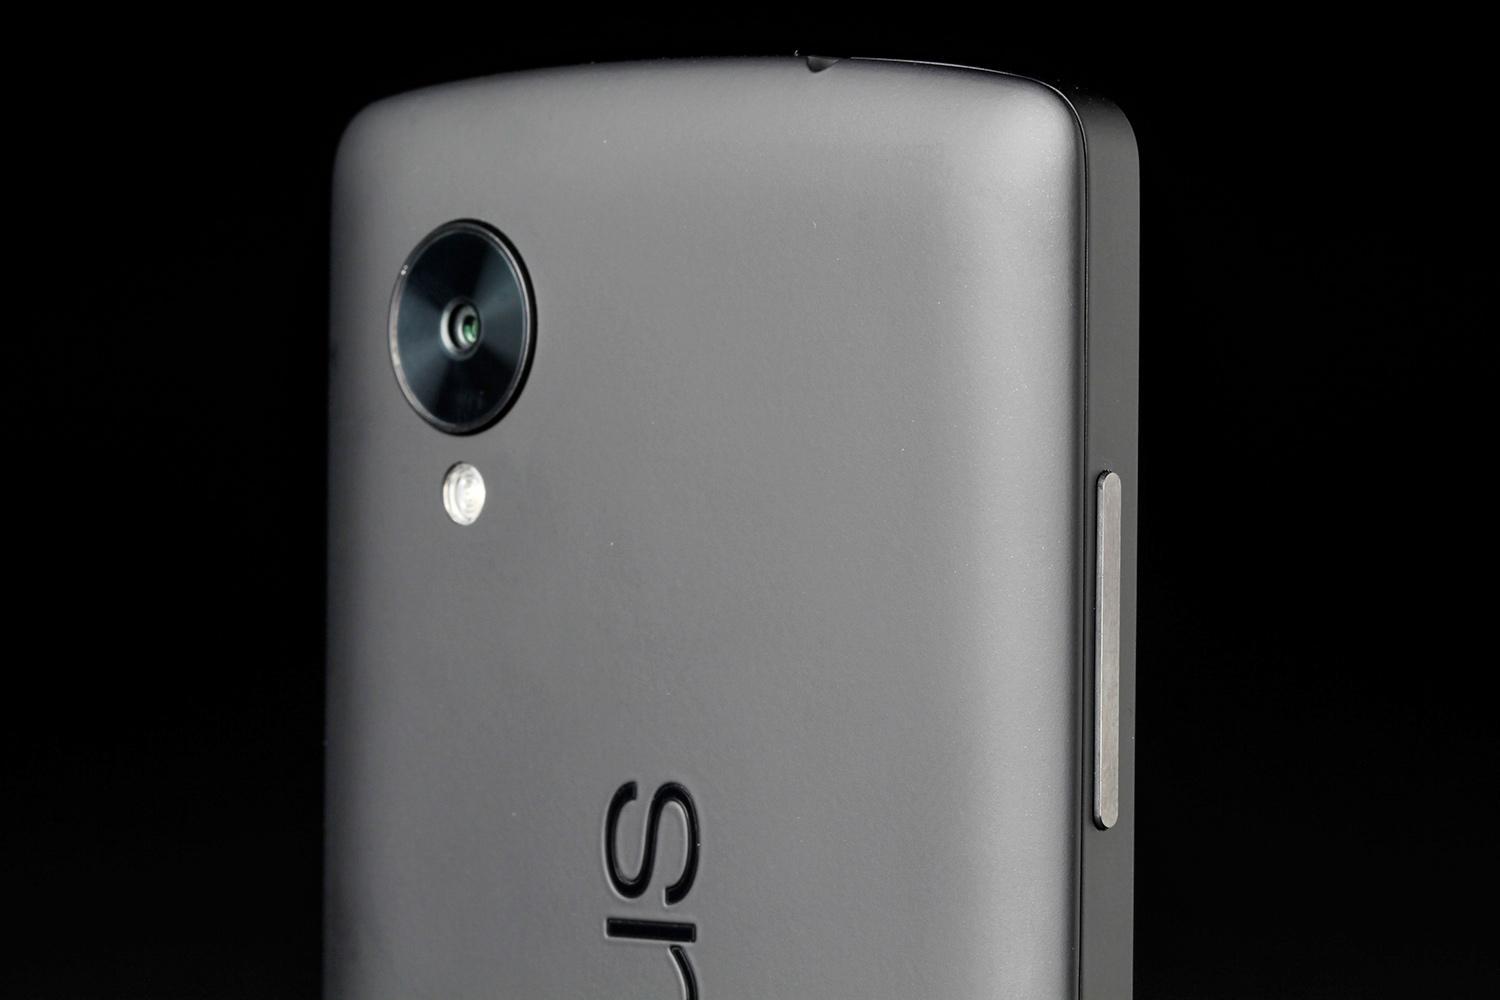 http://www.digitaltrends.com/wp-content/uploads/2013/11/Google-Nexus-5-review-rear-camera-macro-angle.jpg